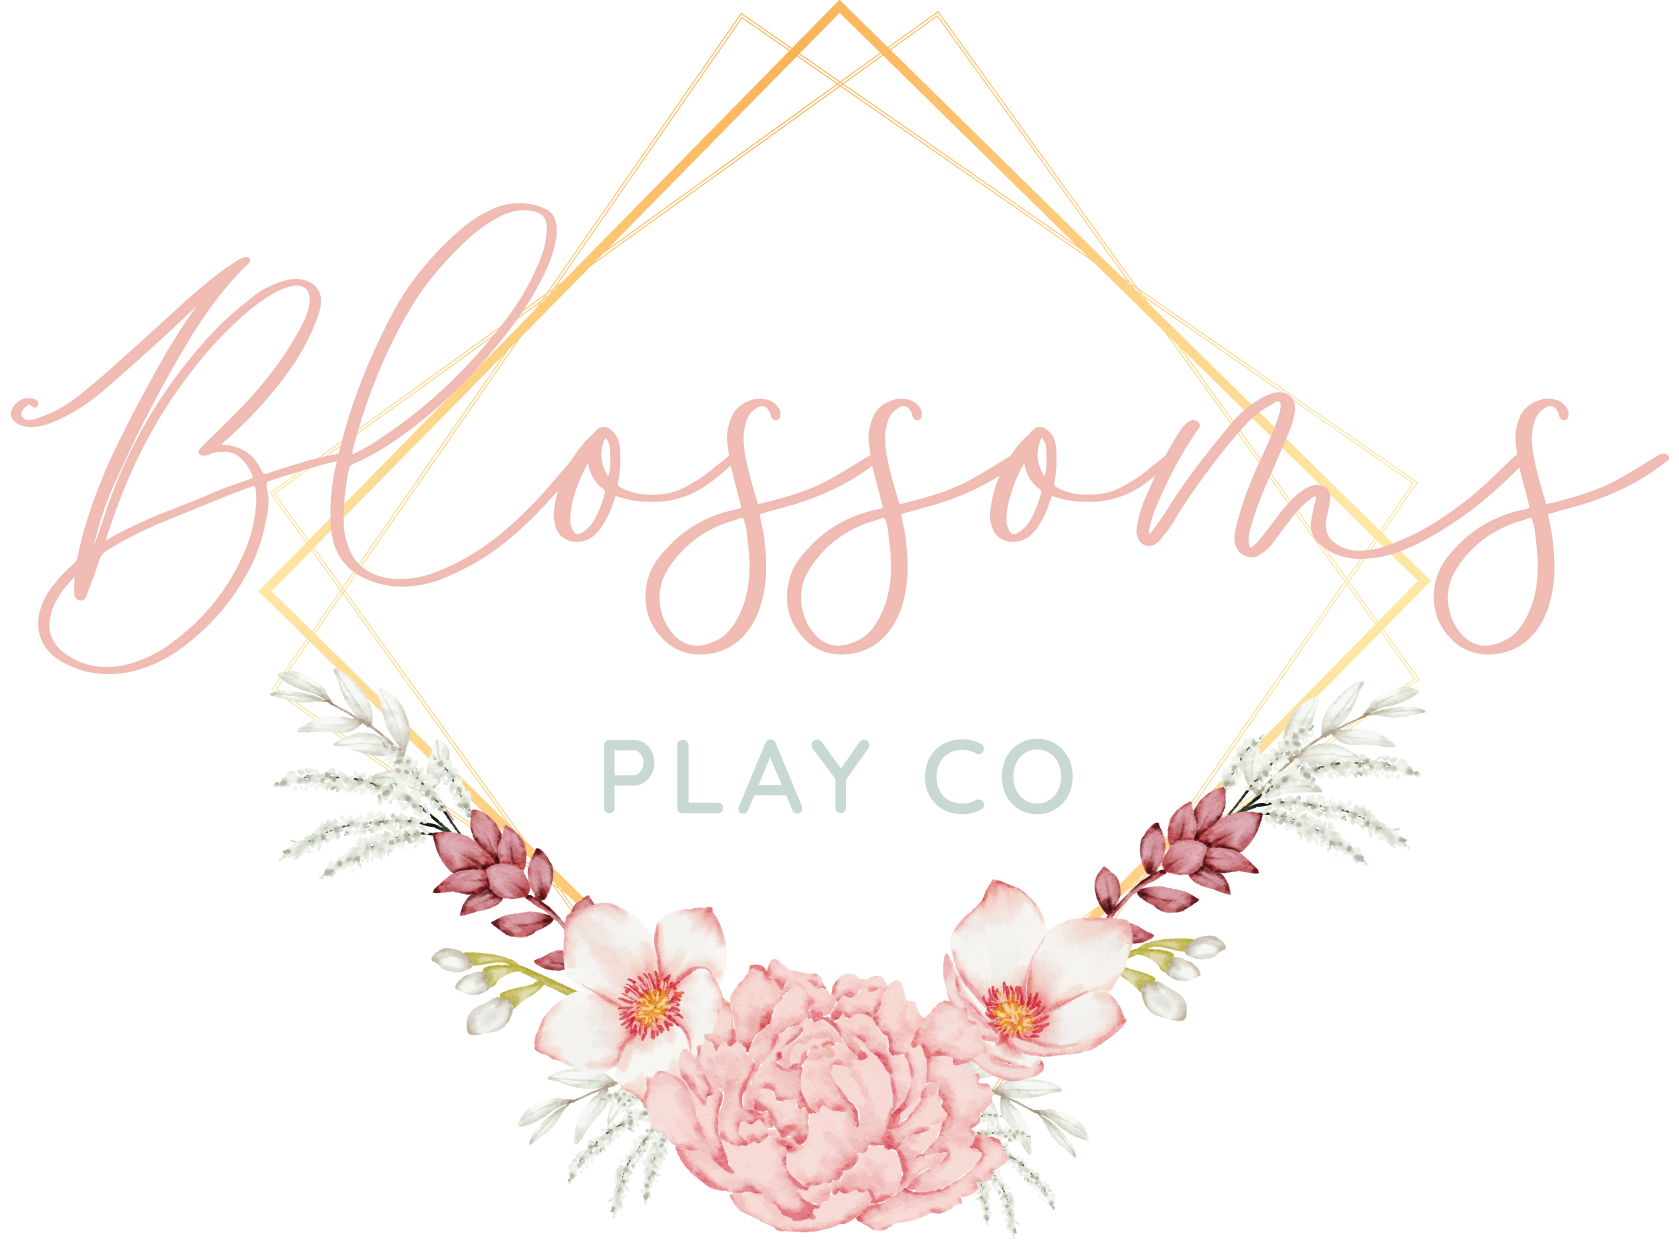 Blossom Play Co